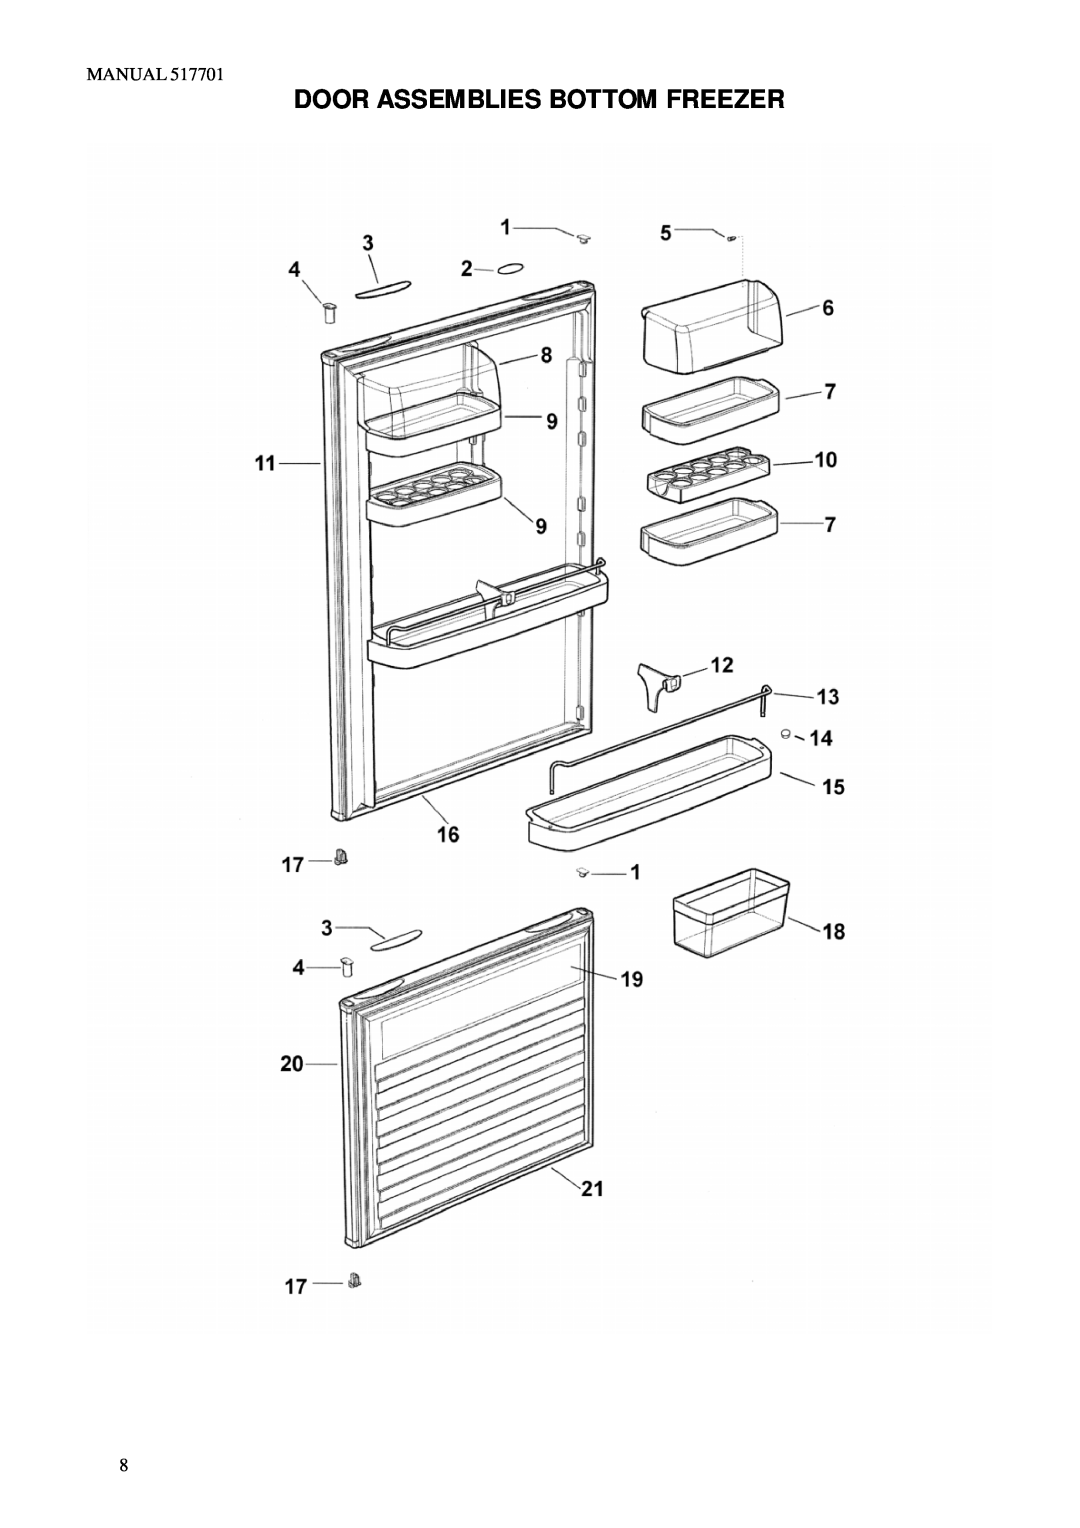 LG Electronics E440T, E442B, E16B, E16T manual Door Assemblies Bottom Freezer, Manual 